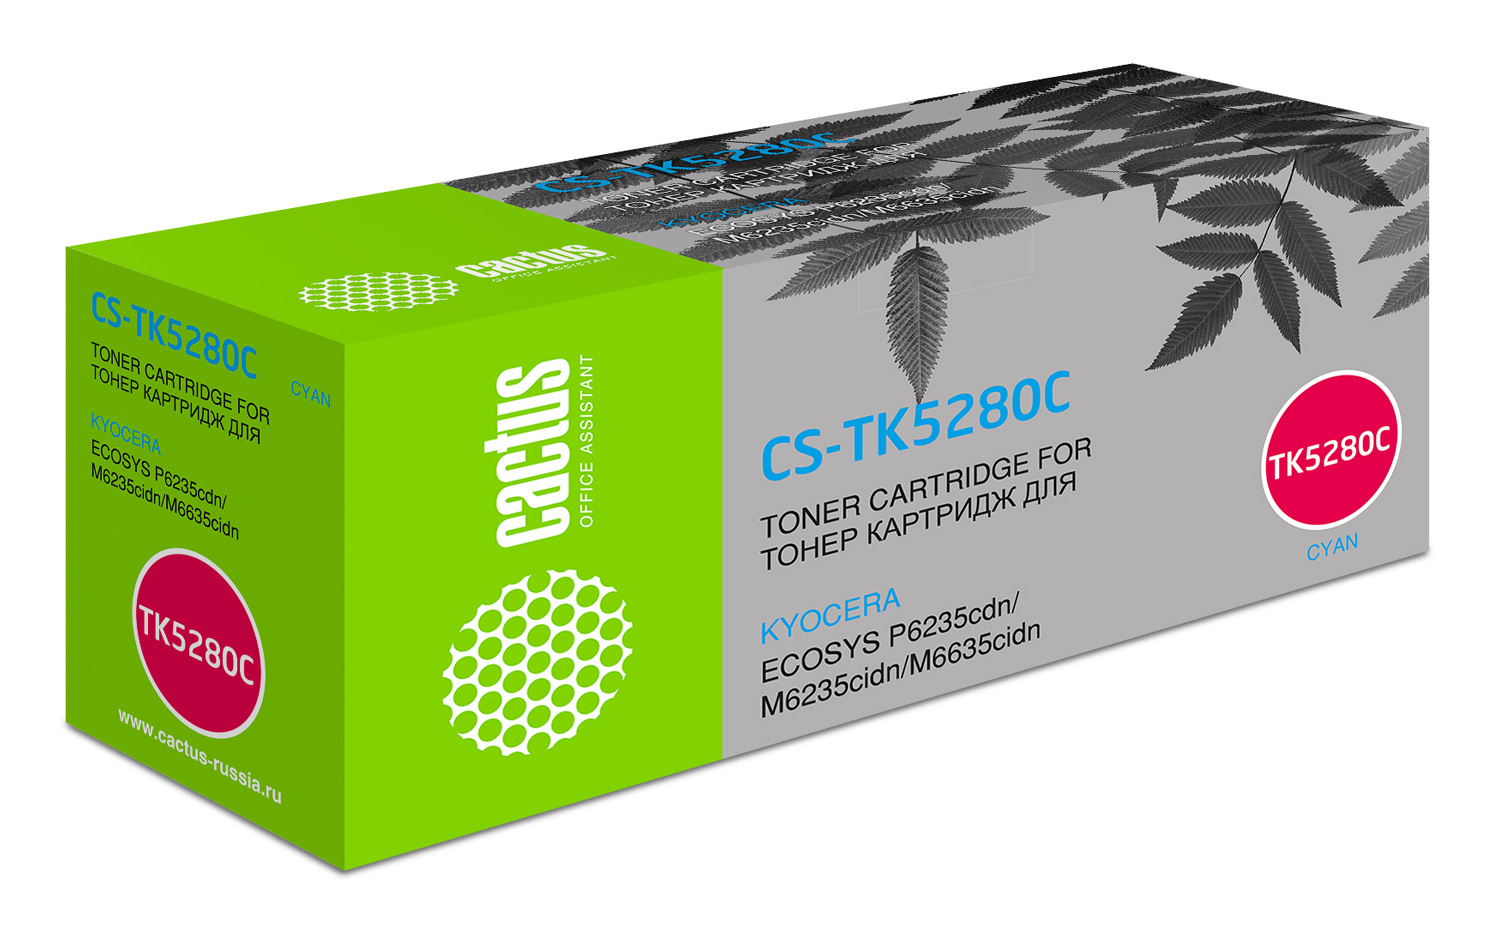   Cactus CS-TK5280C TK-5280C  (11000.)  Kyocera Ecosys P6235cdn/M6235cidn/M6635cidn